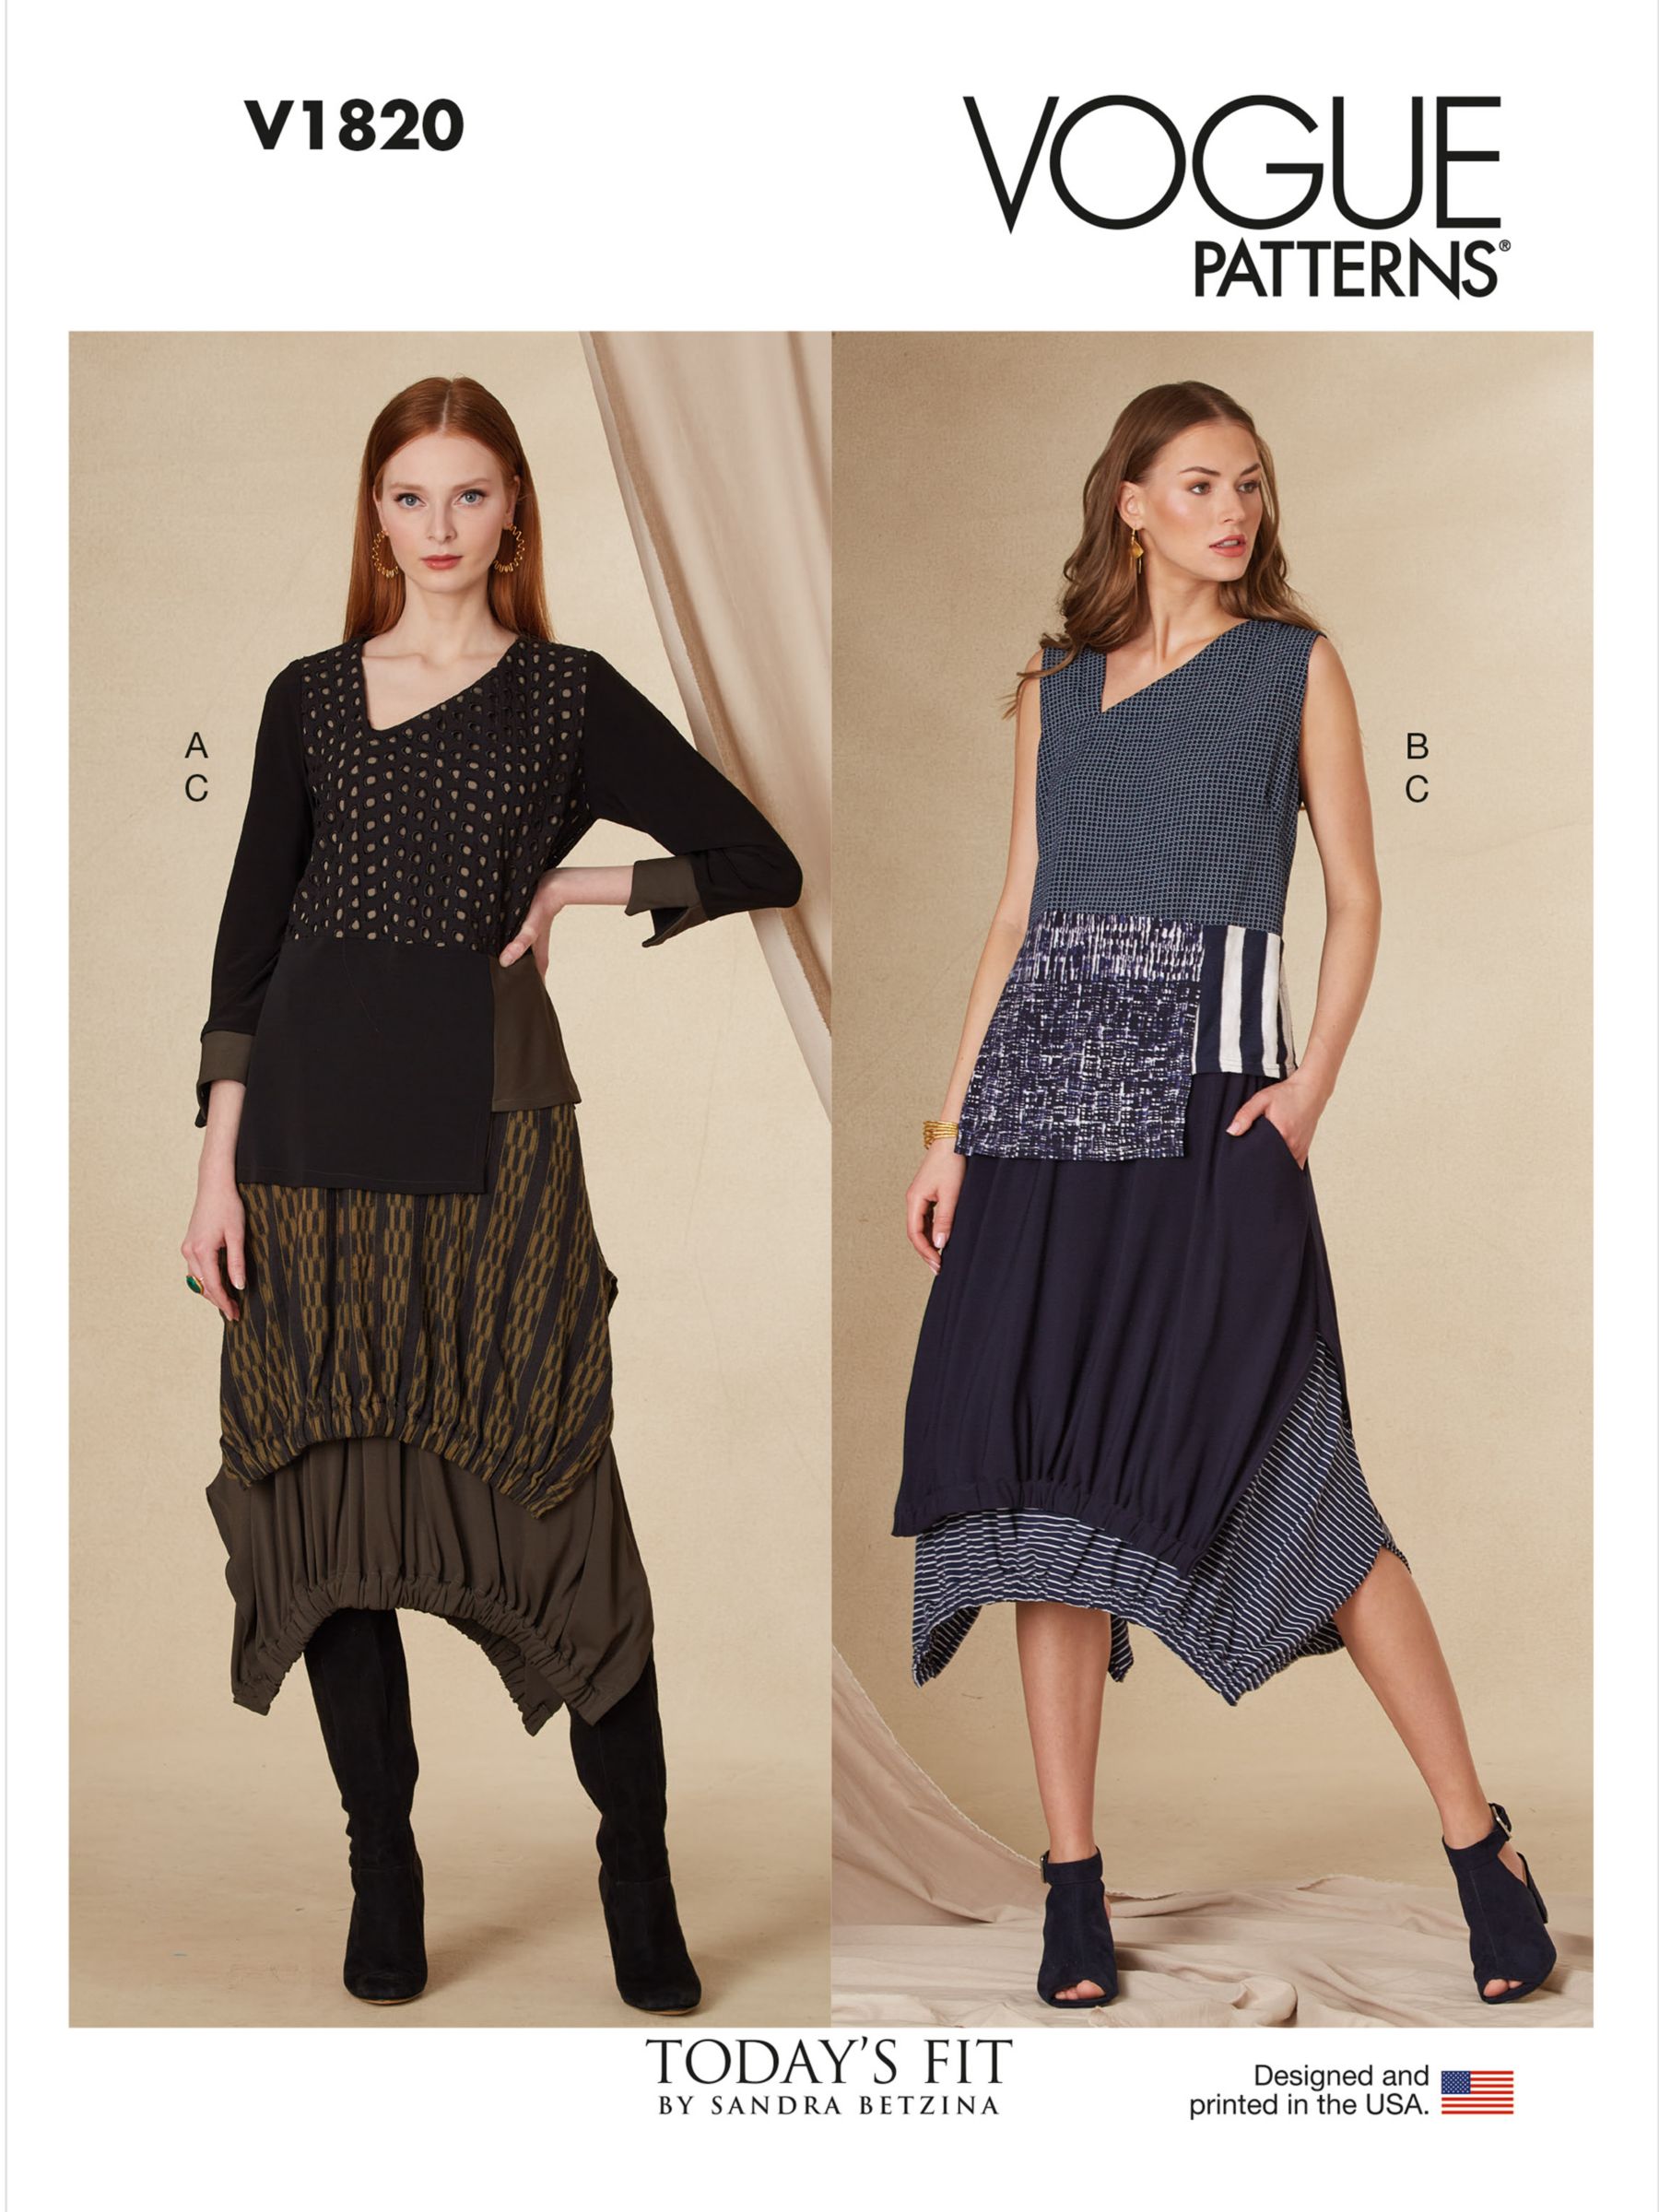 Vogue Patterns vogue sewing patterns women Vogue Advanced Skirt Pattern Size 8 10 12 31664319542 